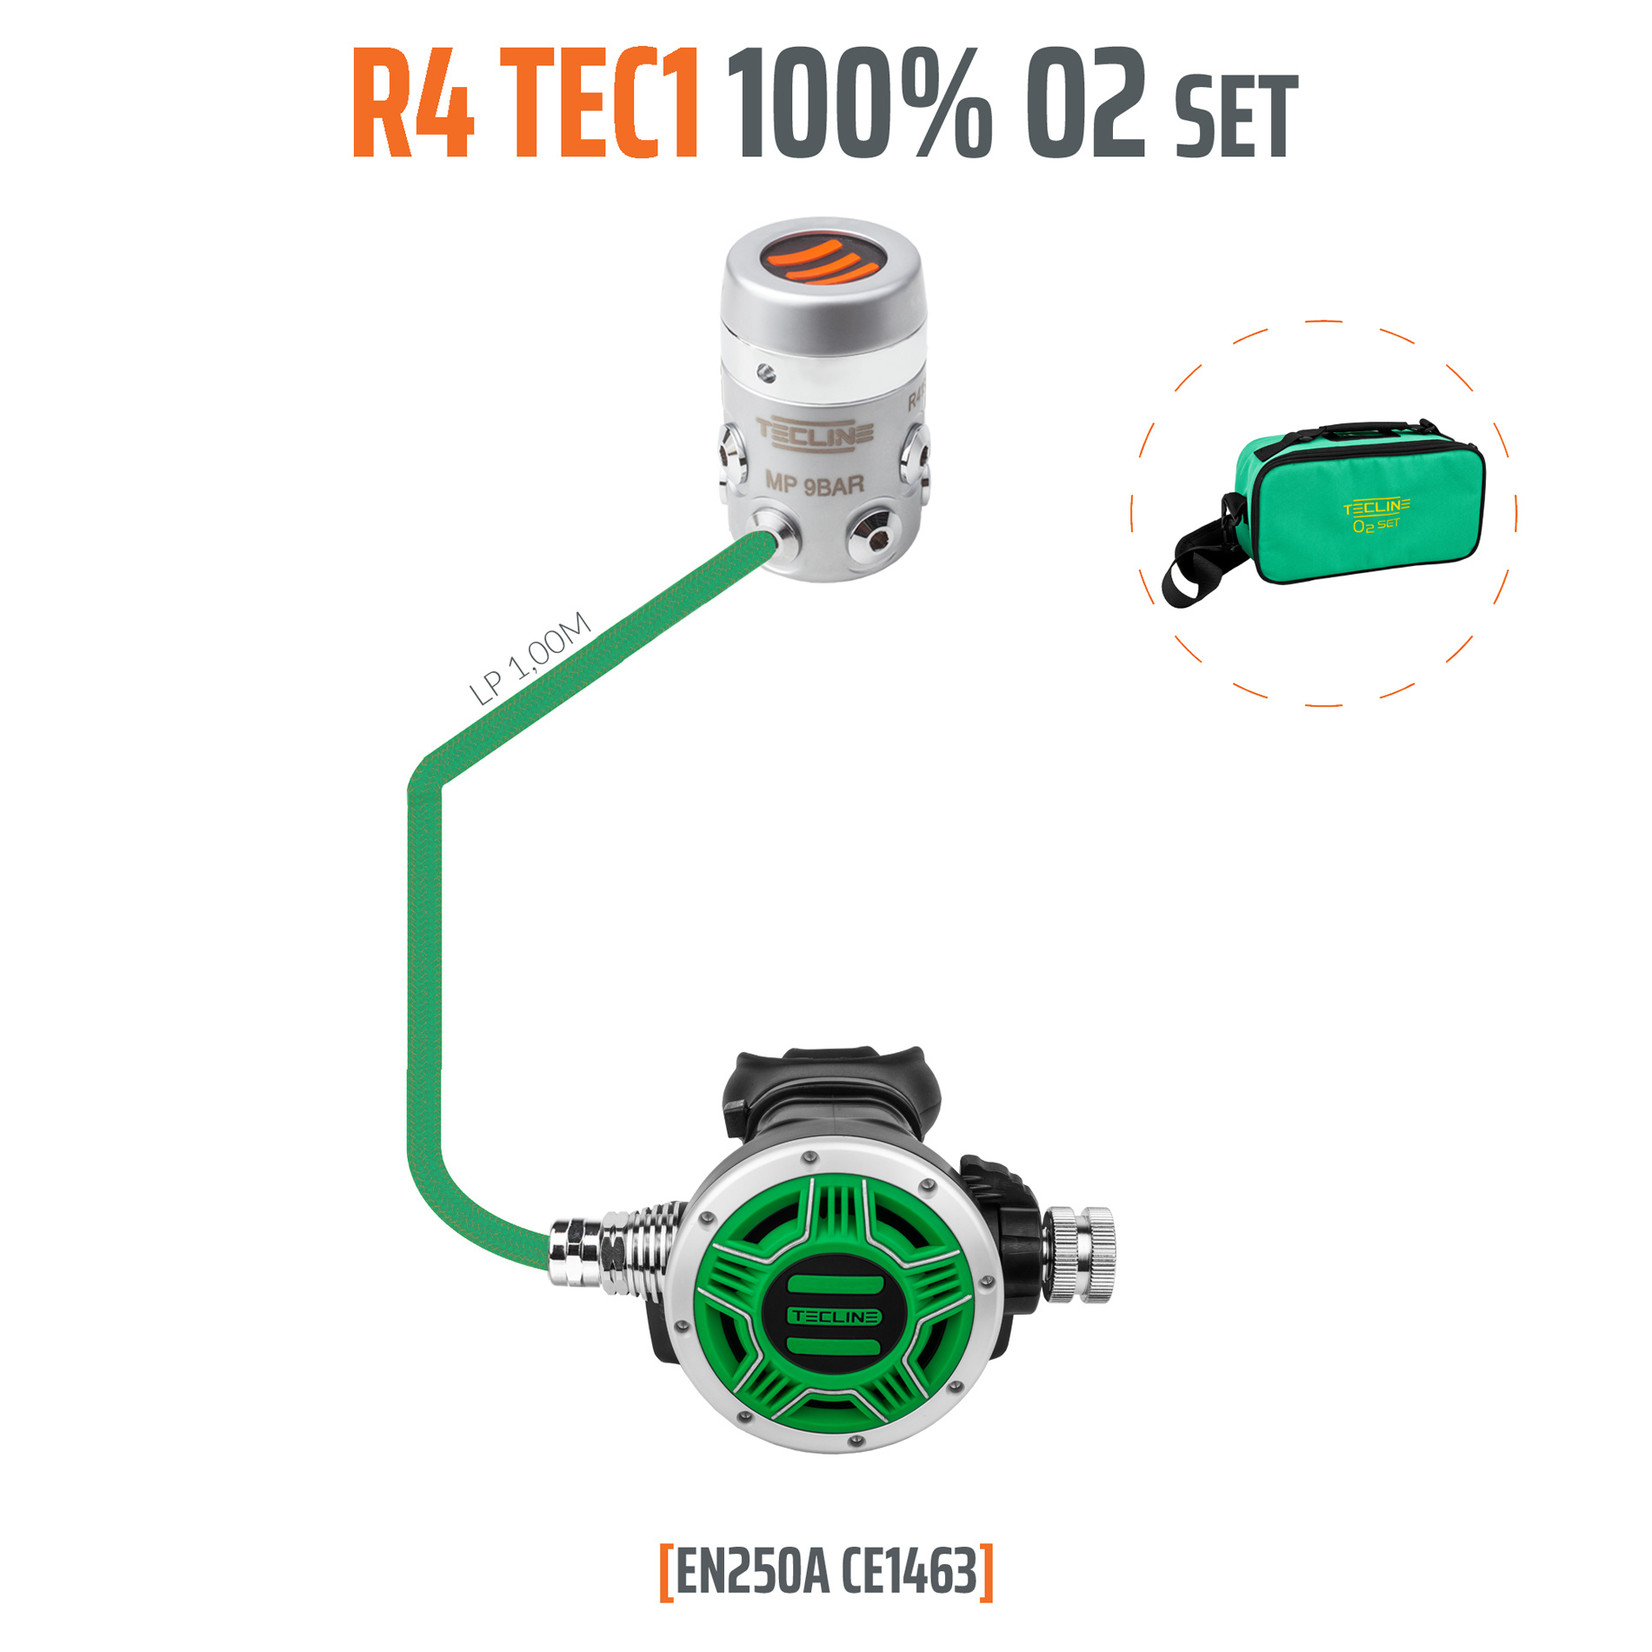 Tecline Regulator R4 TEC1 100% O2 M26x2, stage set - EN250A